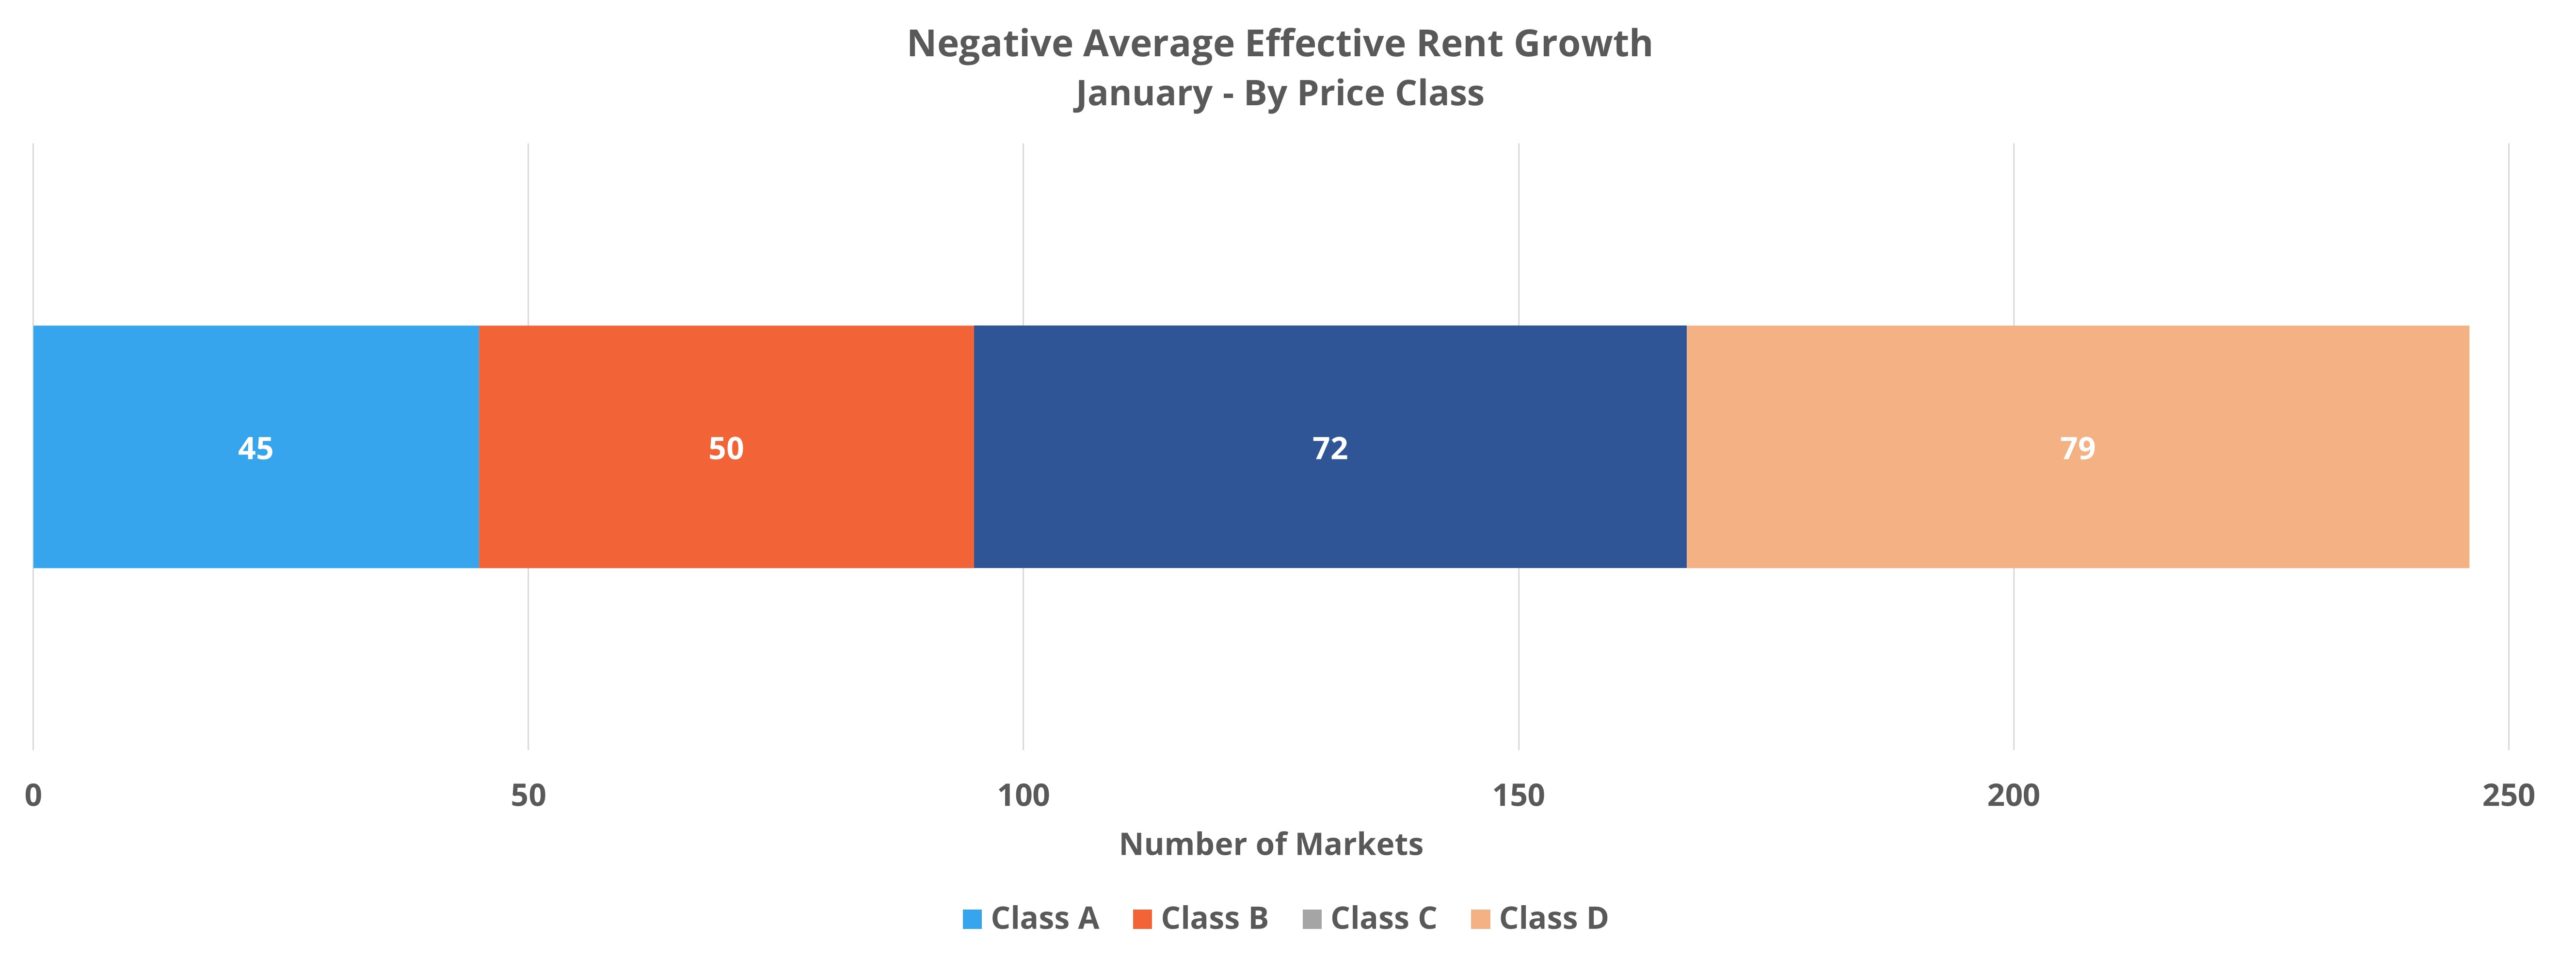 Negative Average Effective Rent Growth